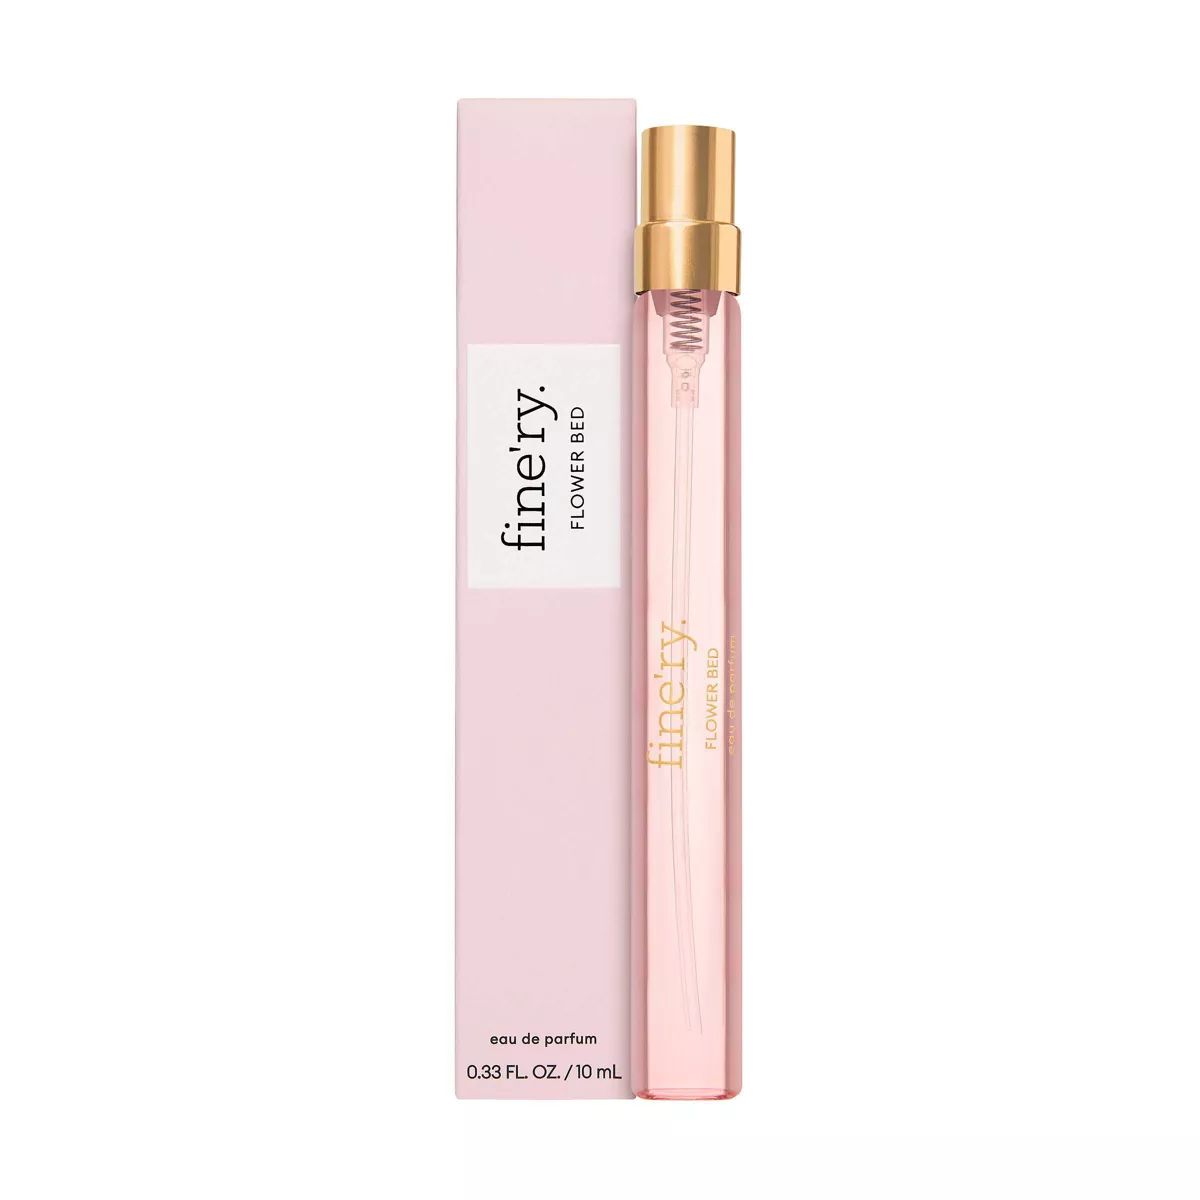 fine'ry. Mini Purse Spray Perfume - Flower Bed - 0.33 fl oz | Target